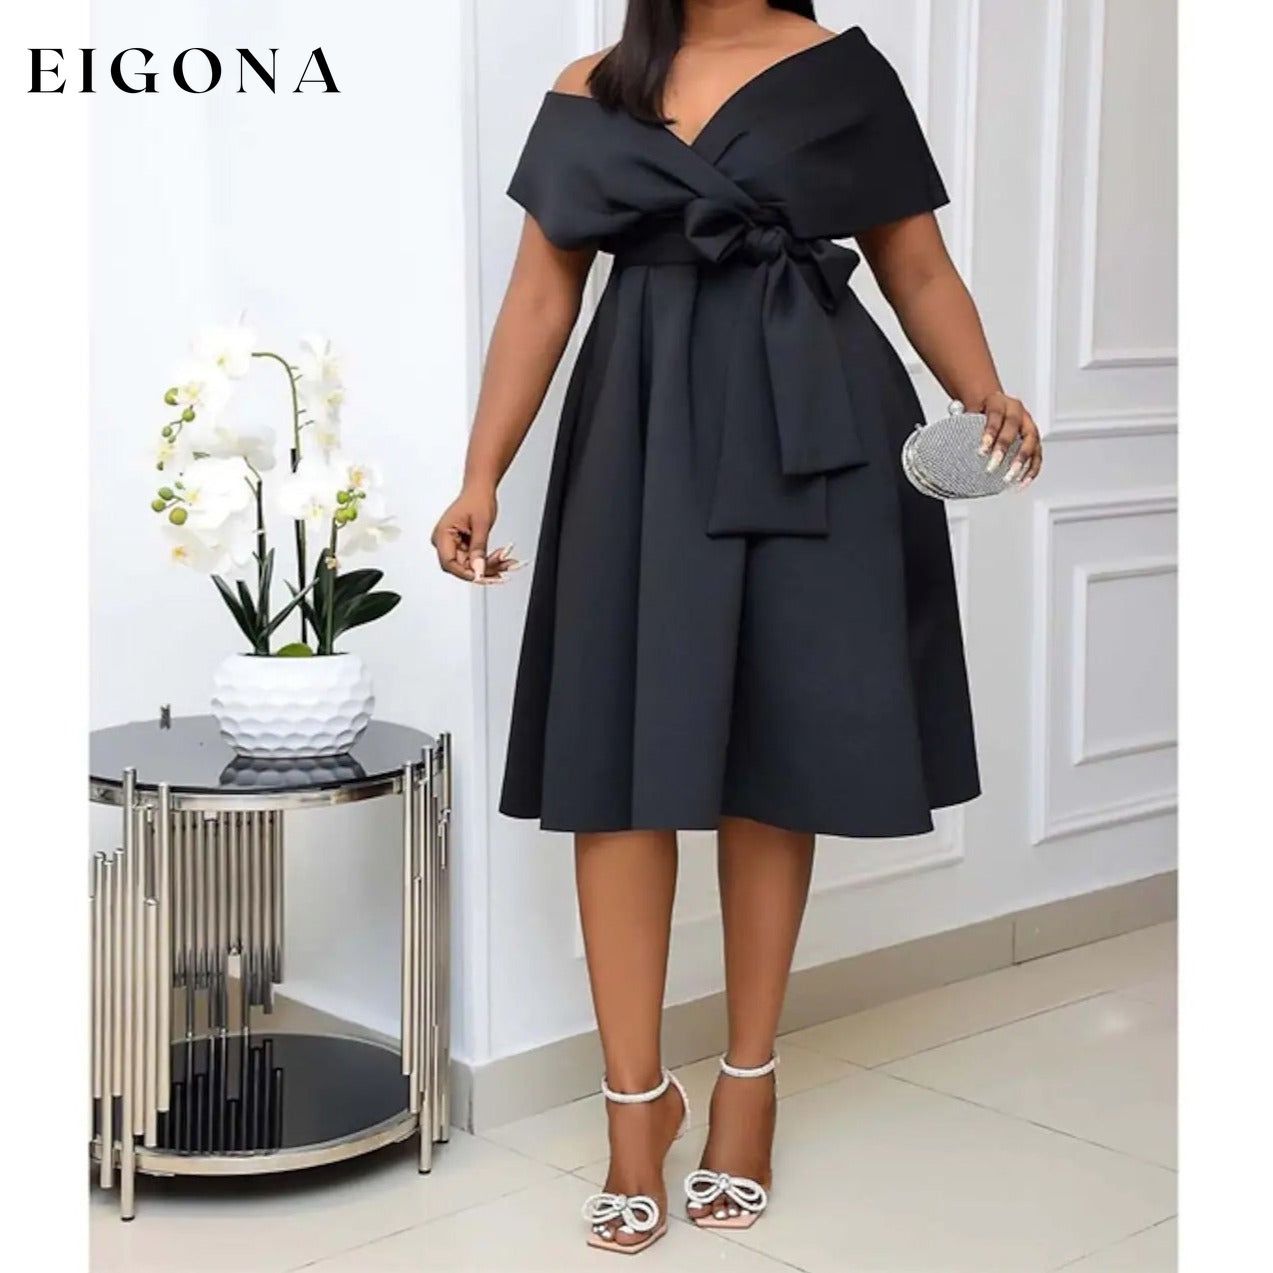 Women's V-Neck Elegant A-Line Dress Black __stock:200 casual dresses clothes dresses refund_fee:1200 show-color-swatches